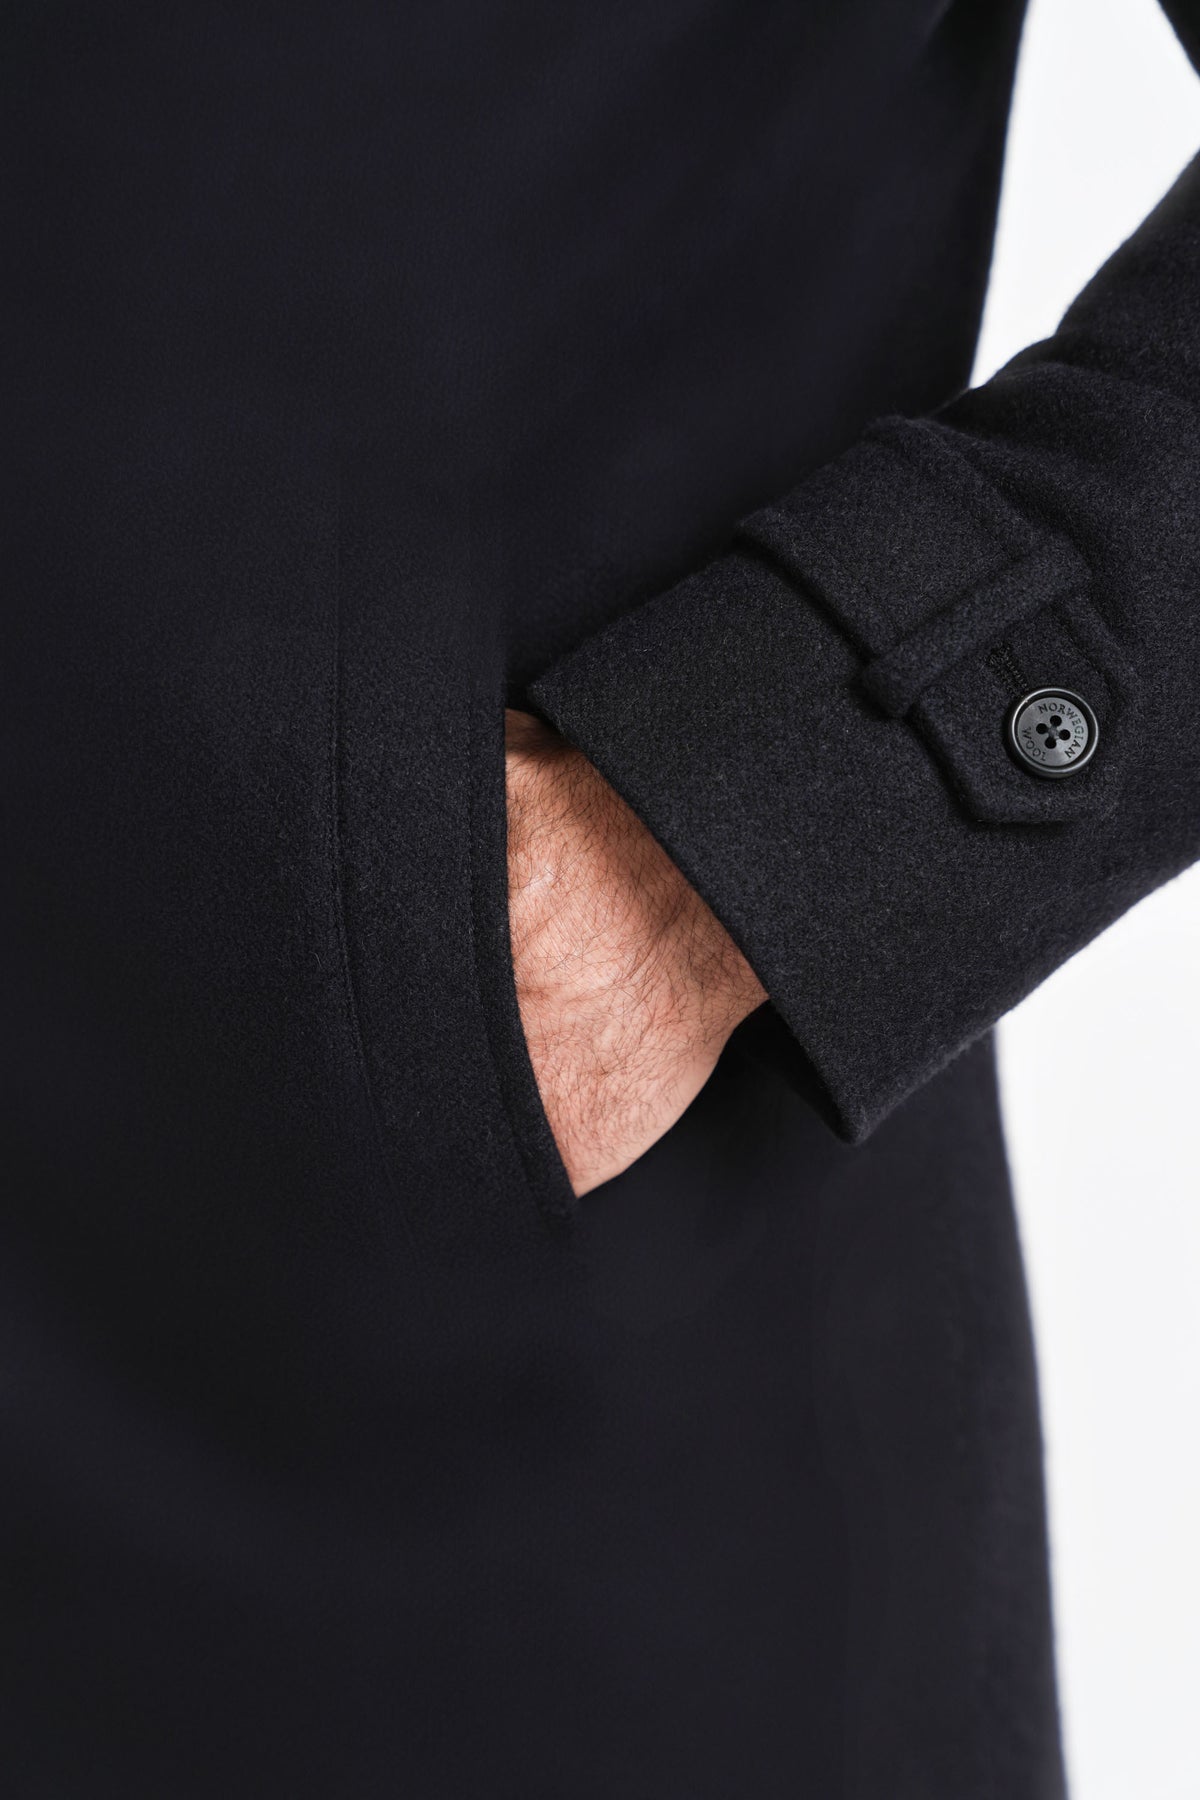 Cashmere Wool ¾ Length Black